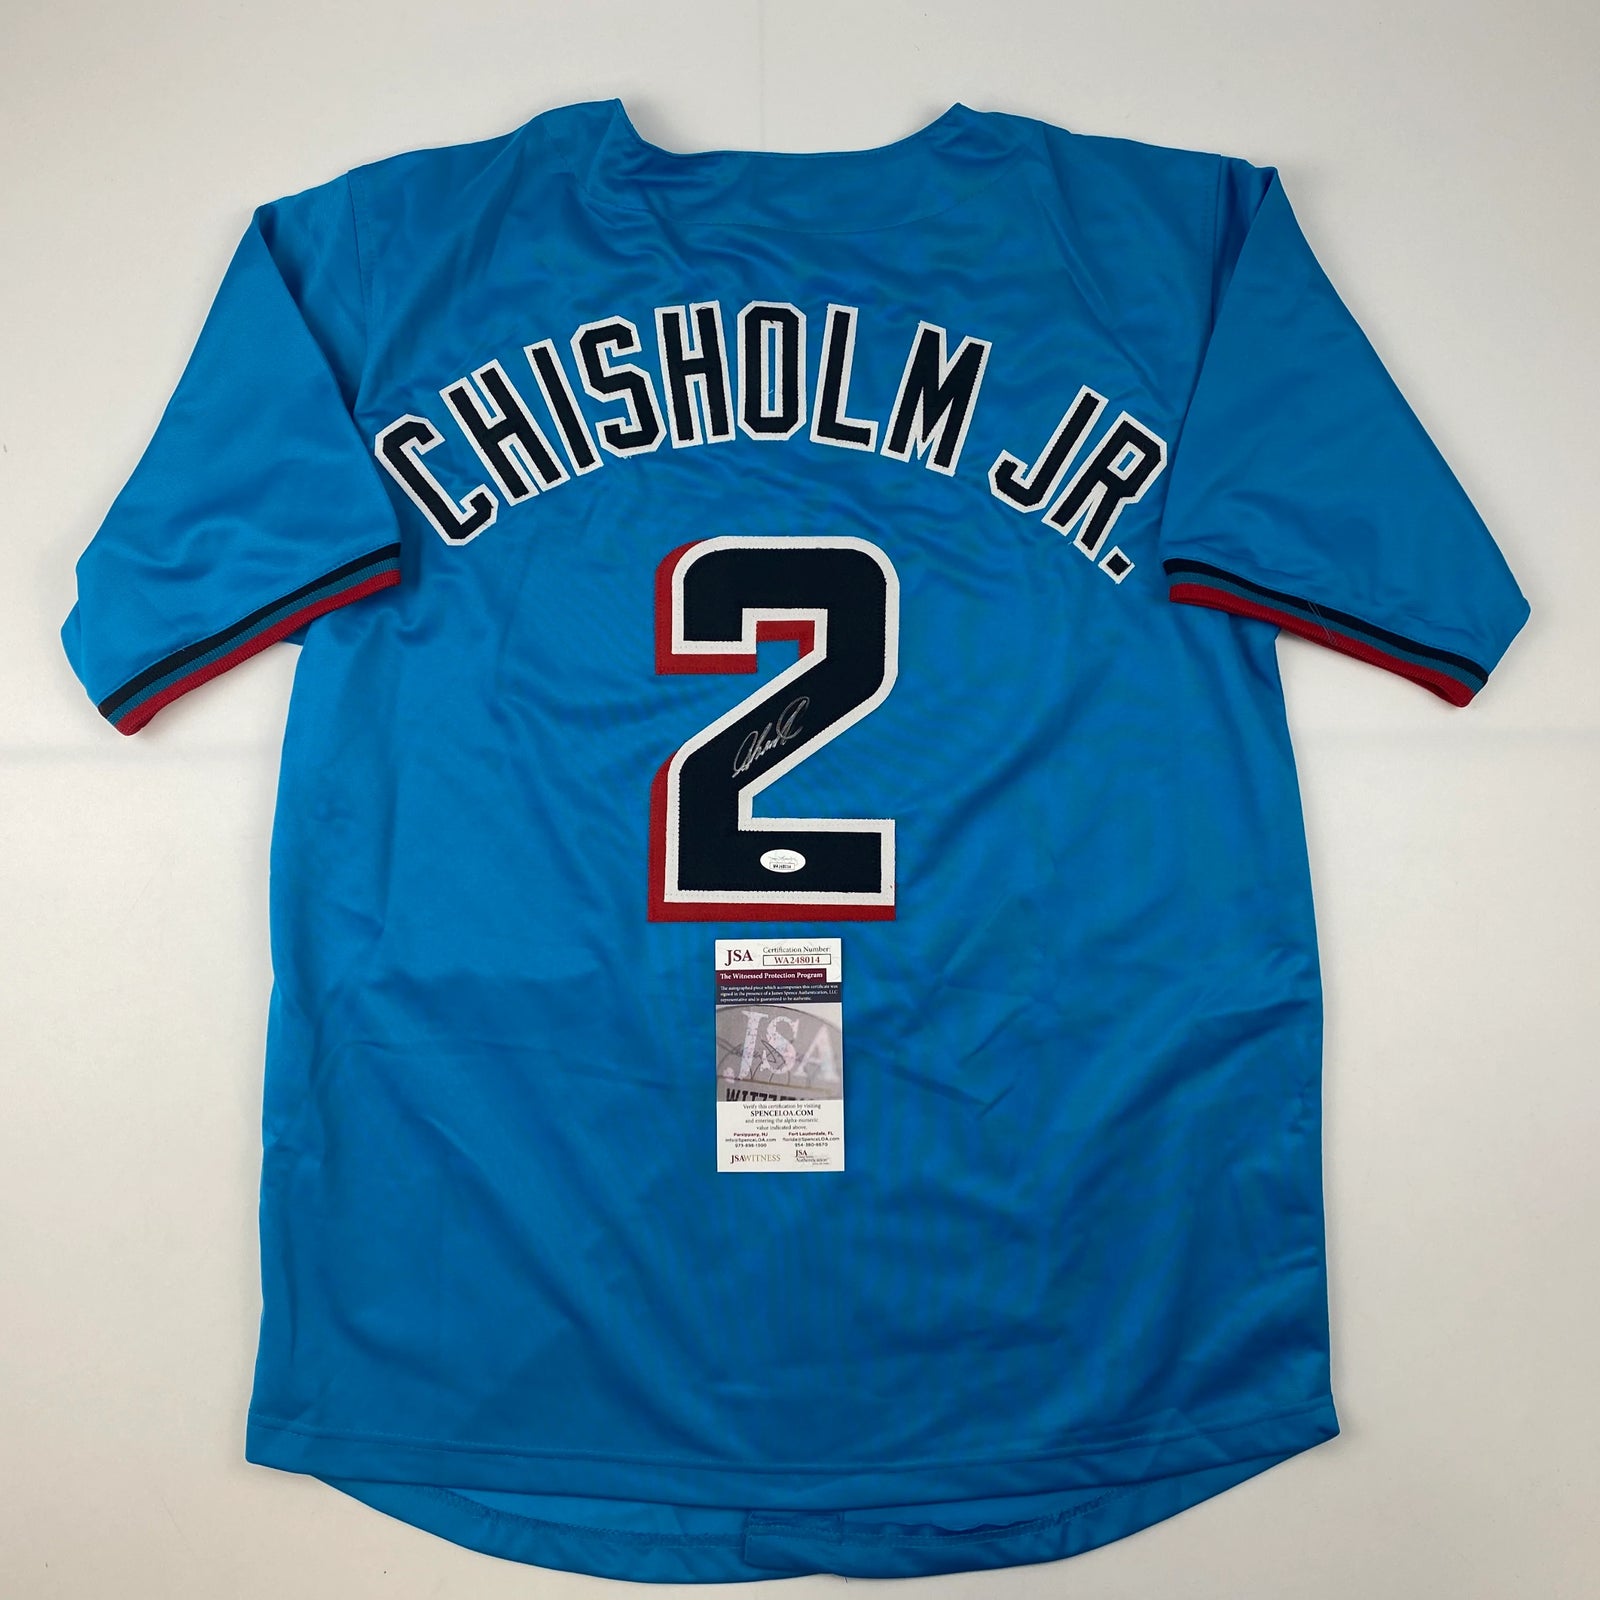 Autographed/Signed Jazz Chisholm Jr. Miami Blue Baseball Jersey